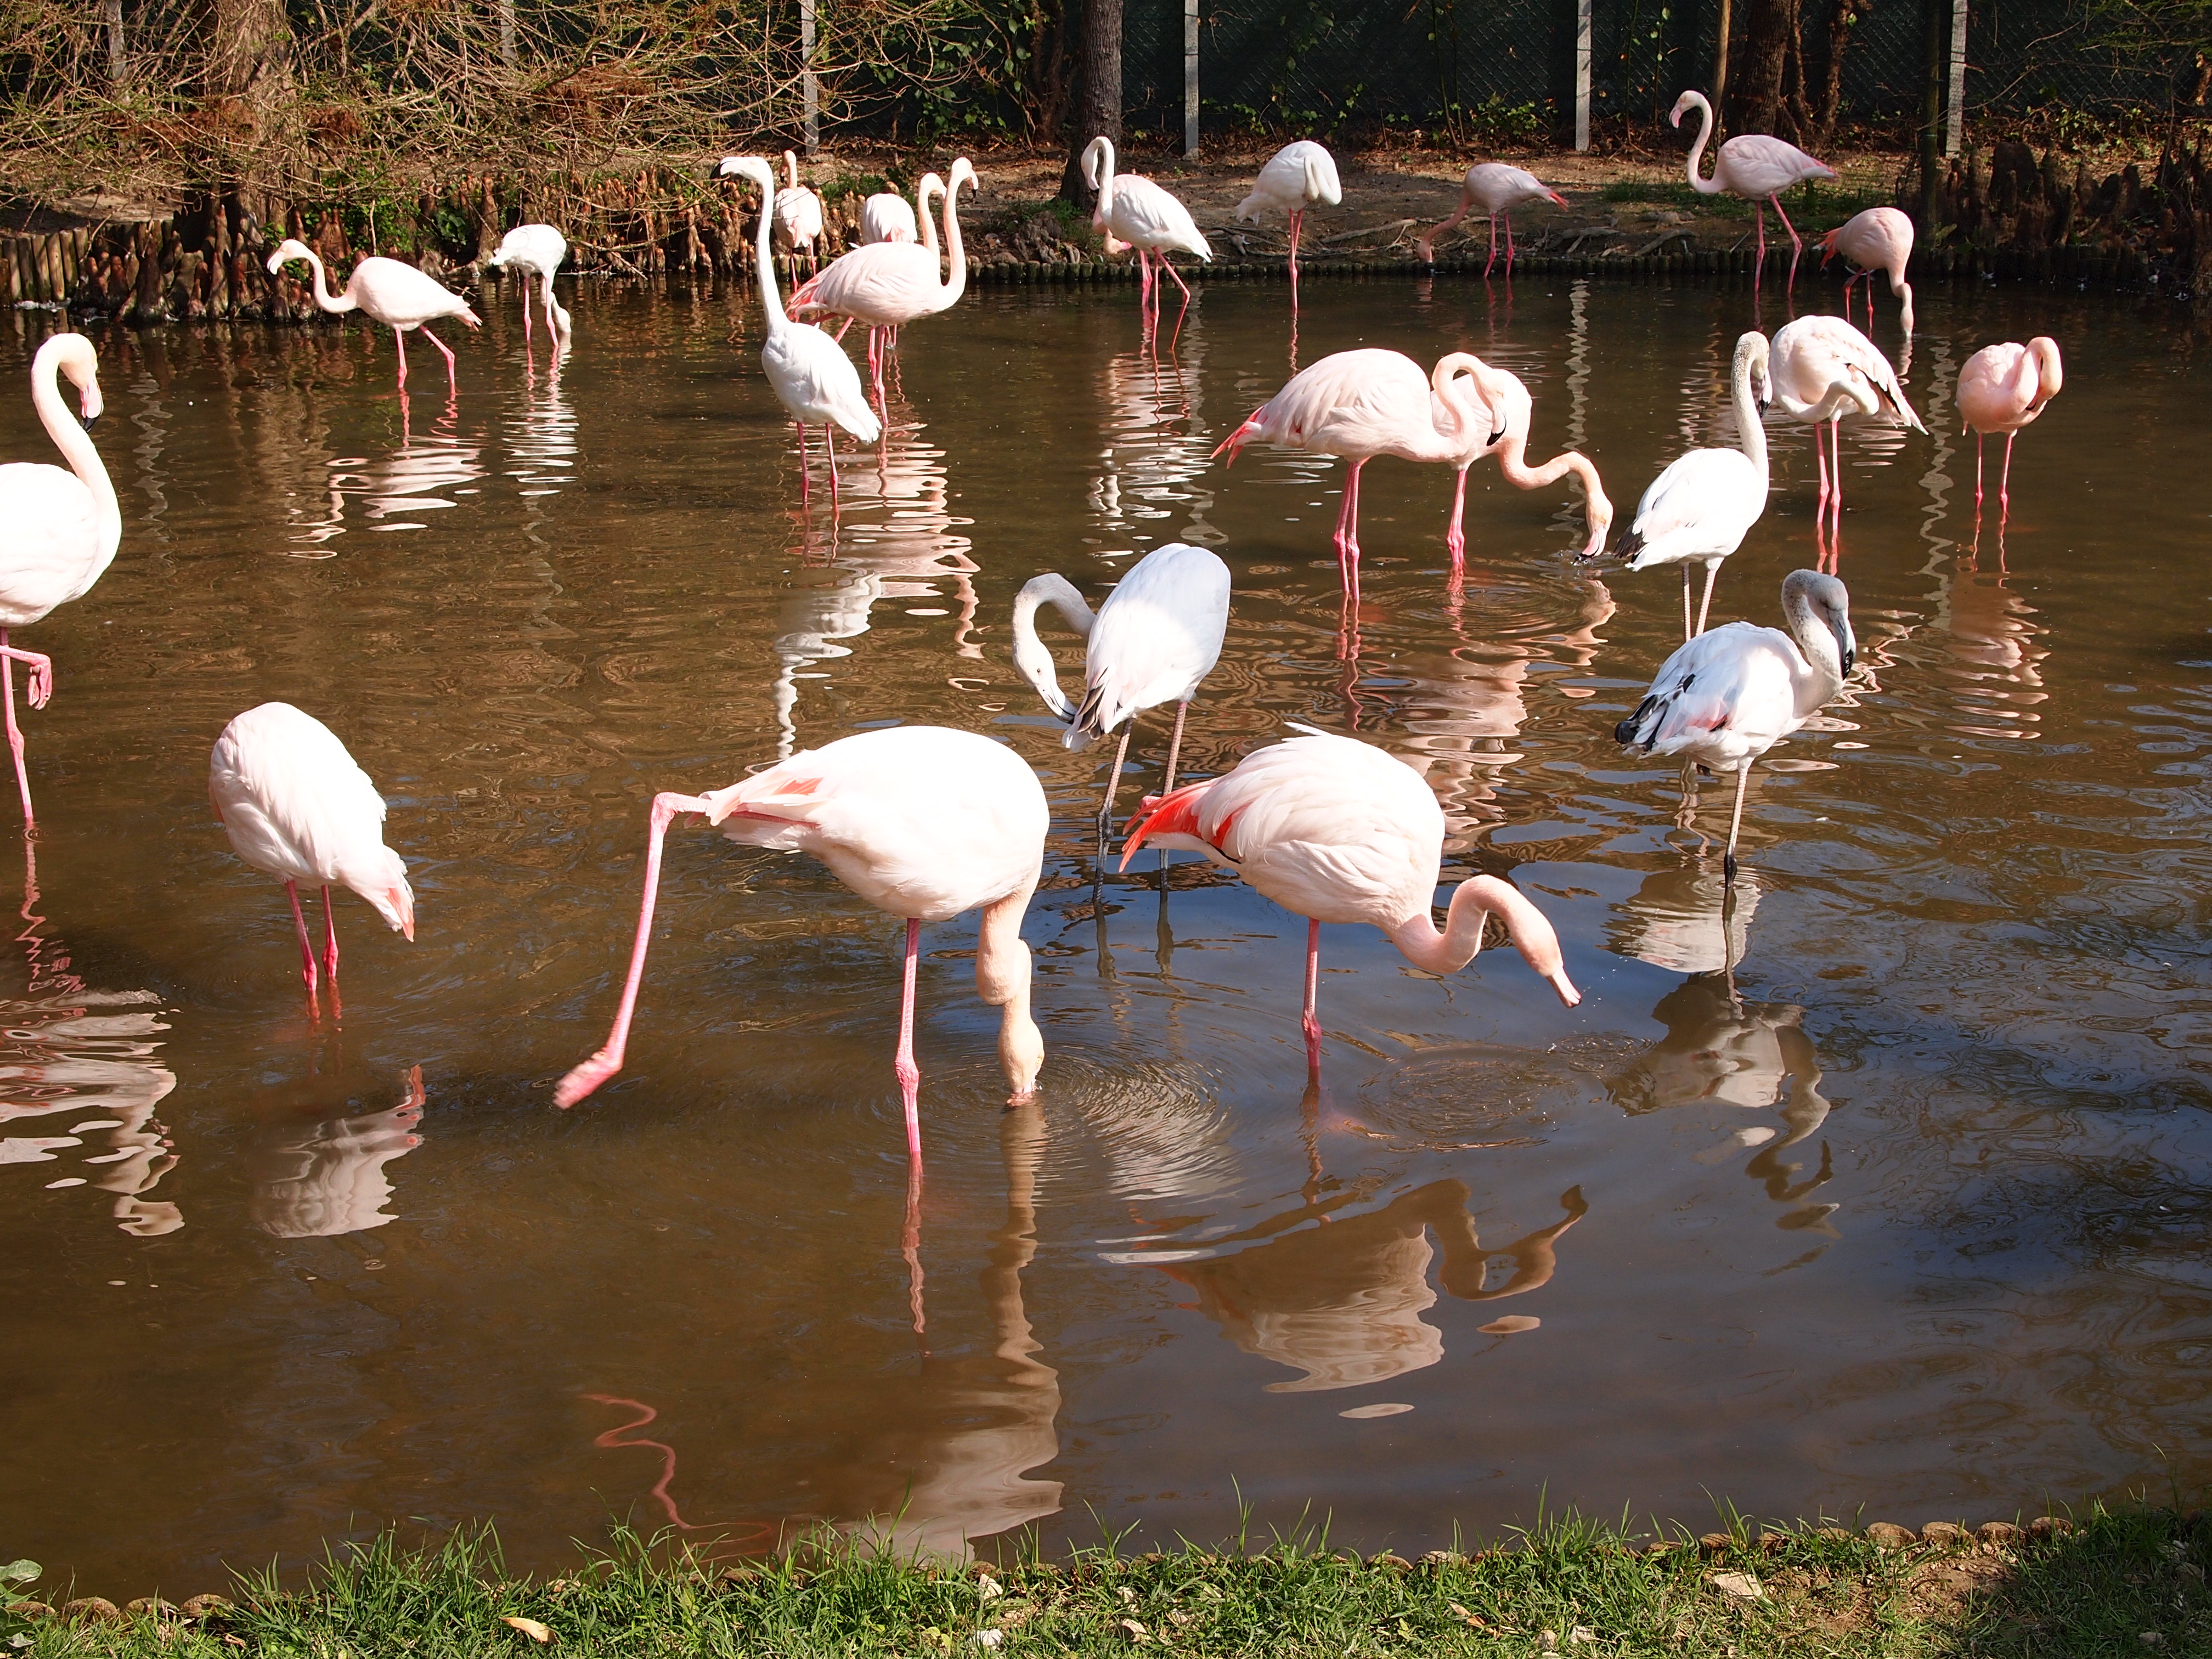 Handy-Wallpaper Tiere, Flamingo kostenlos herunterladen.